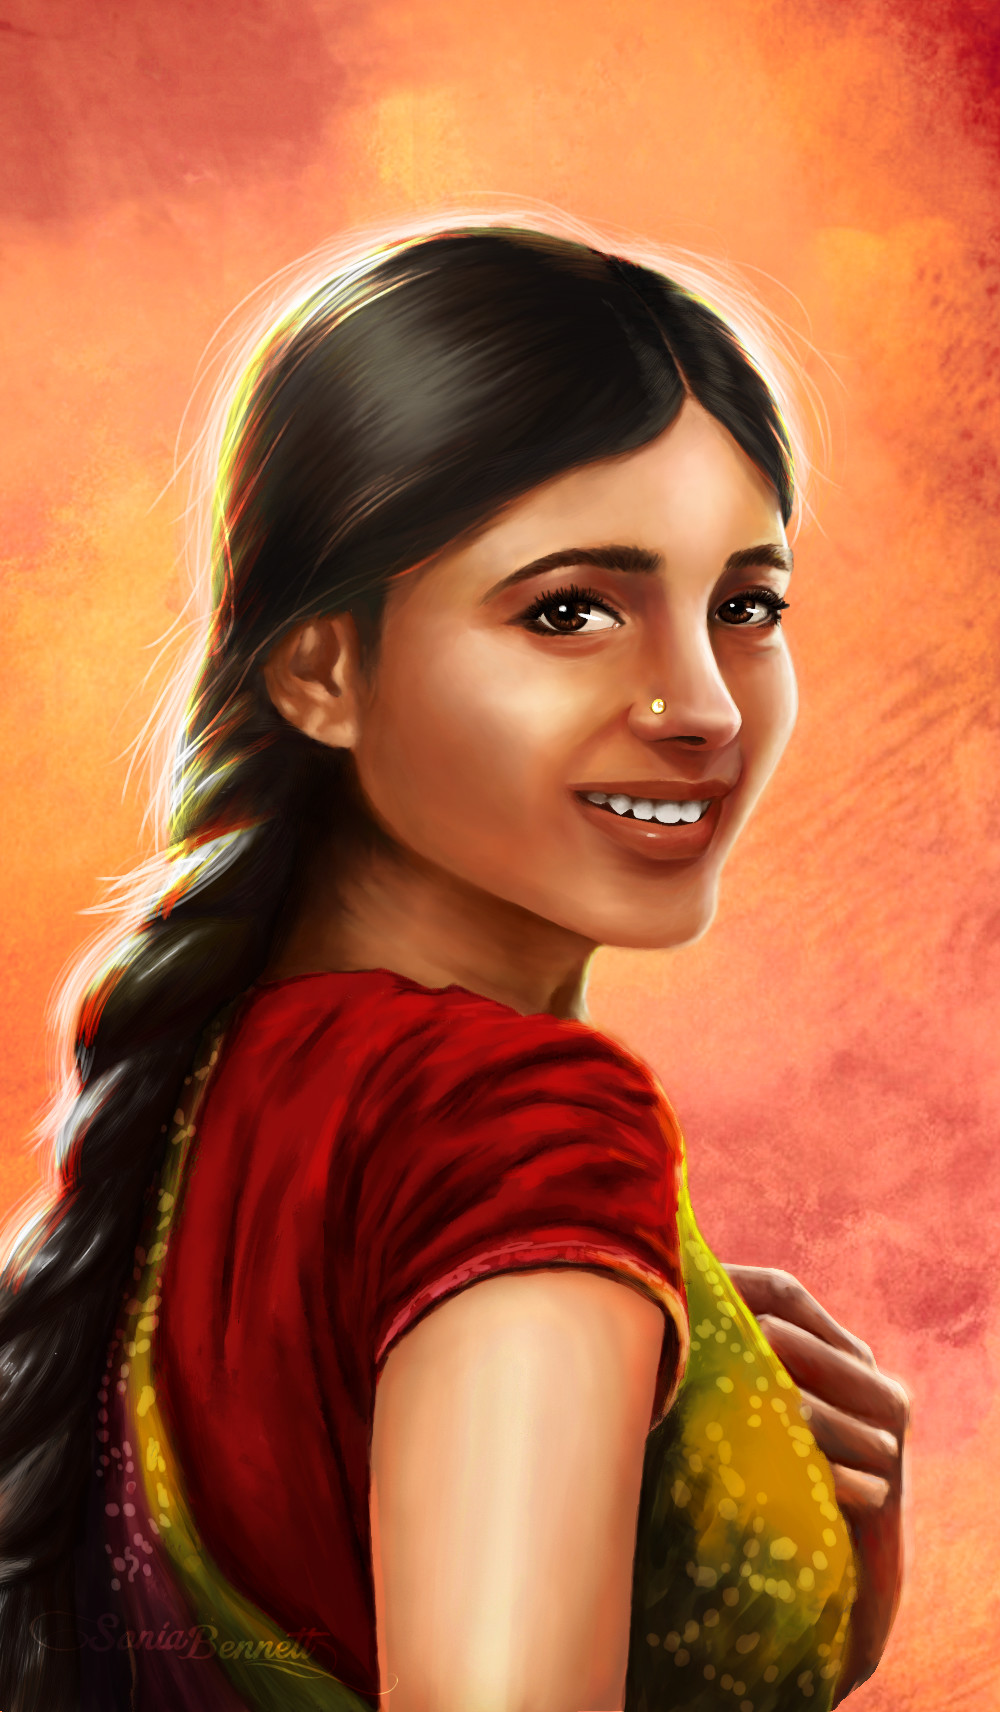 ArtStation - Indian Village girl